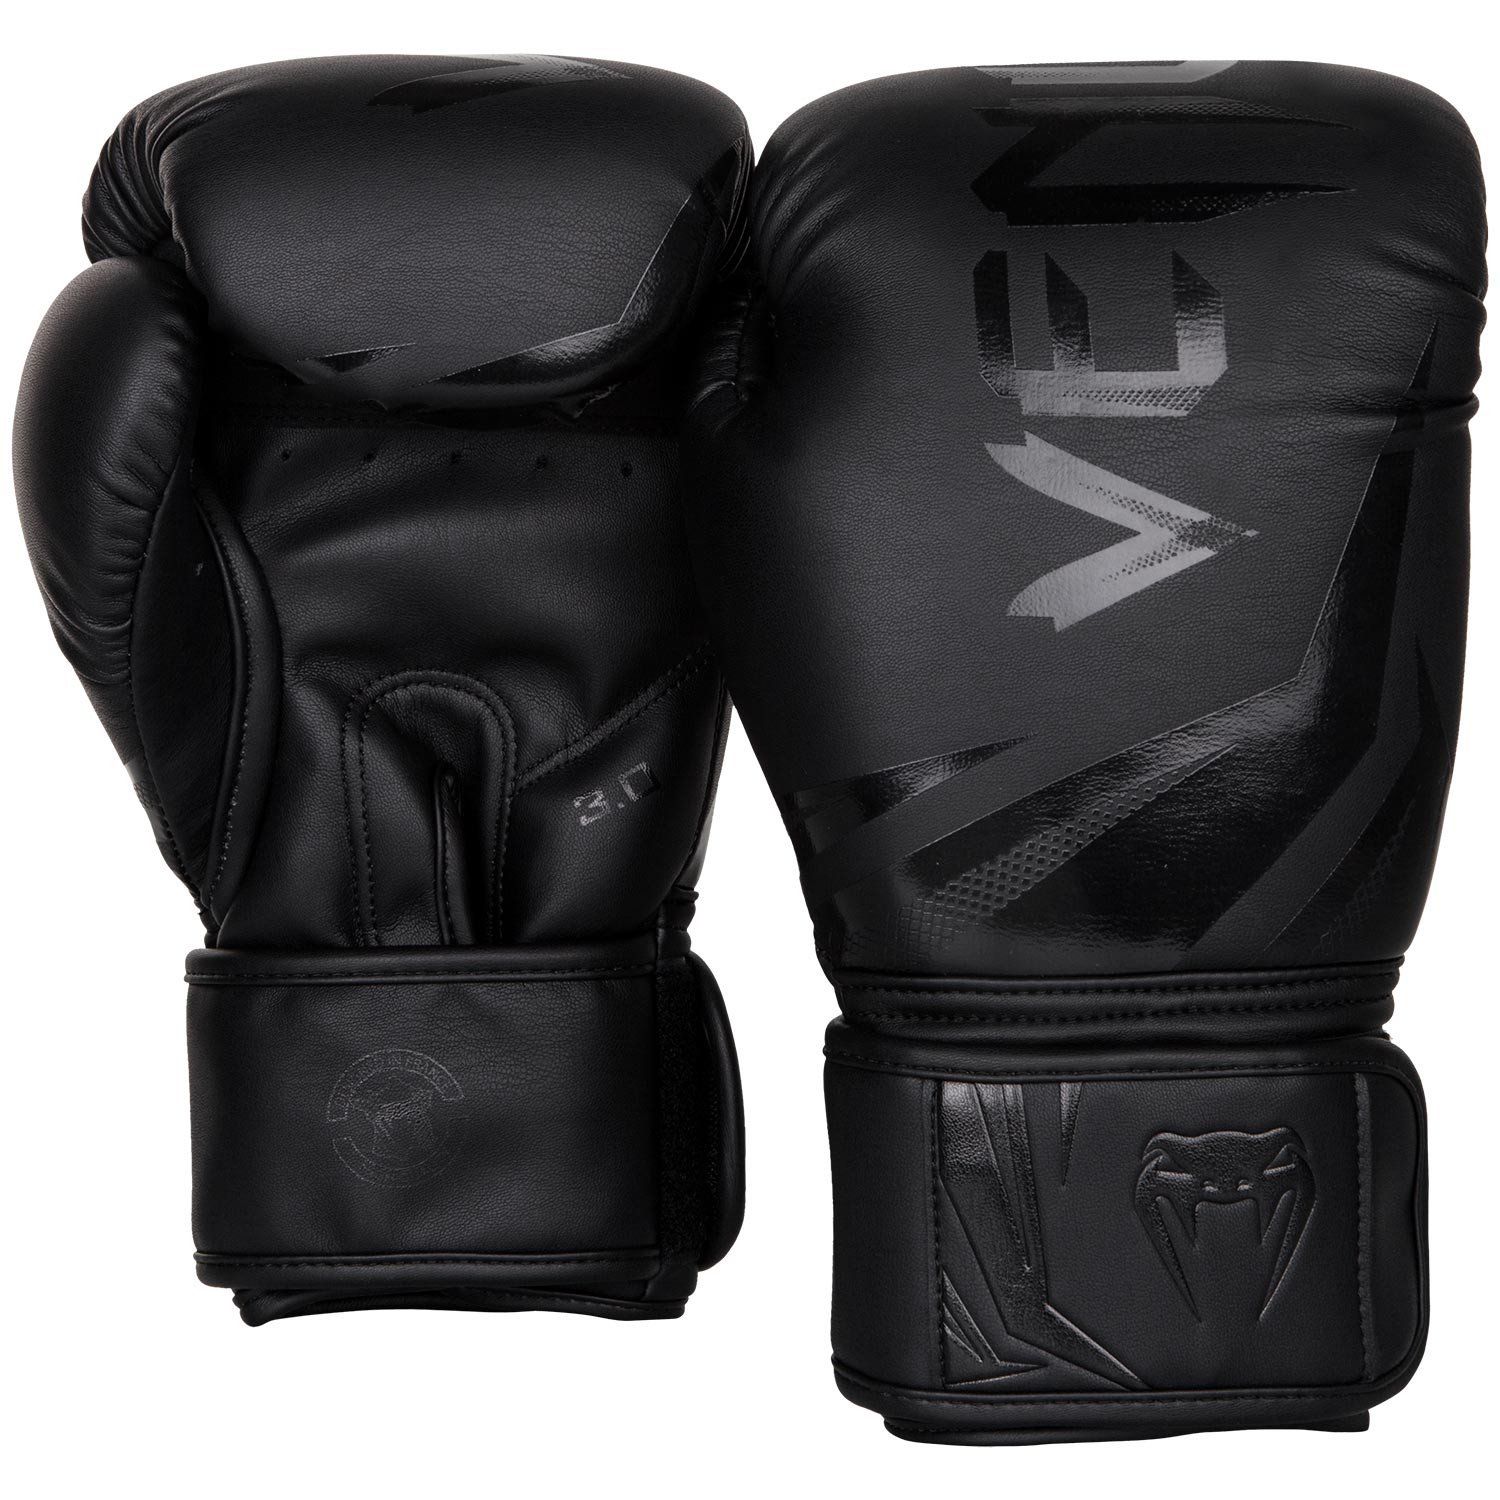 Venum Challenger 3.0 Boxing Gloves - Black/Black